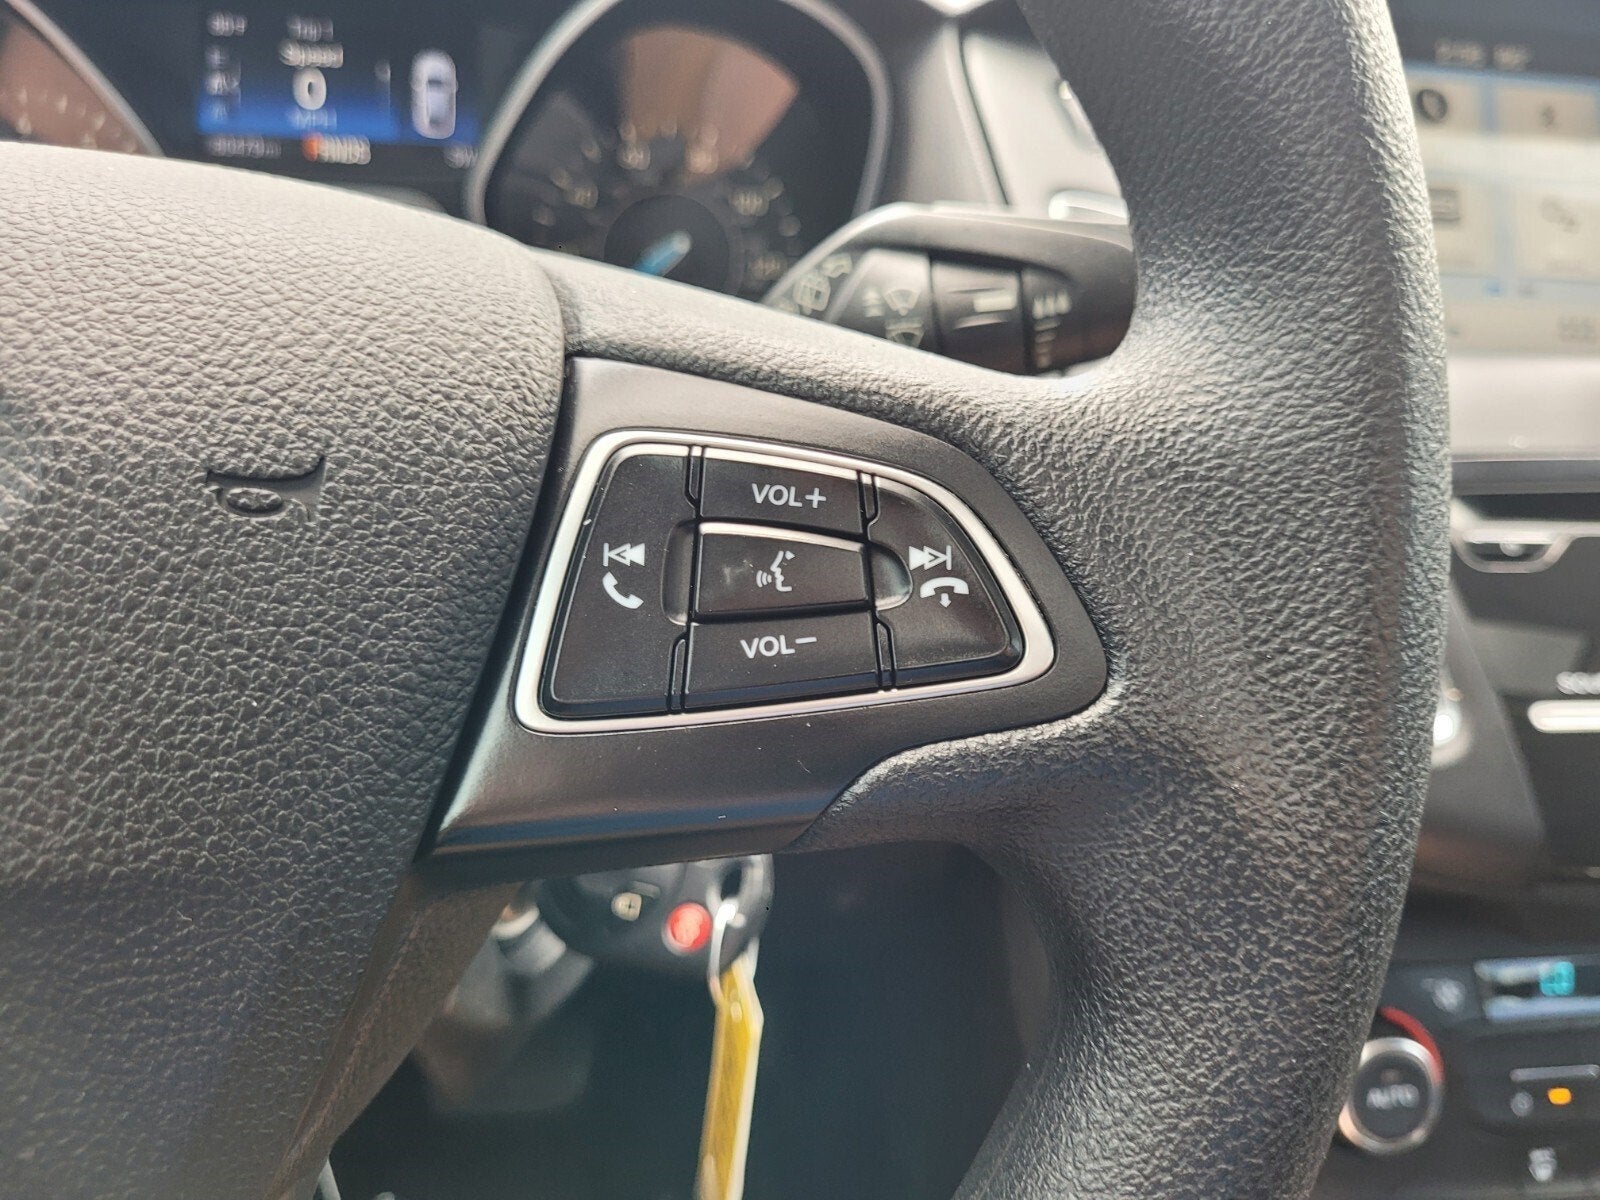 2017 Ford Focus SEL Hatch